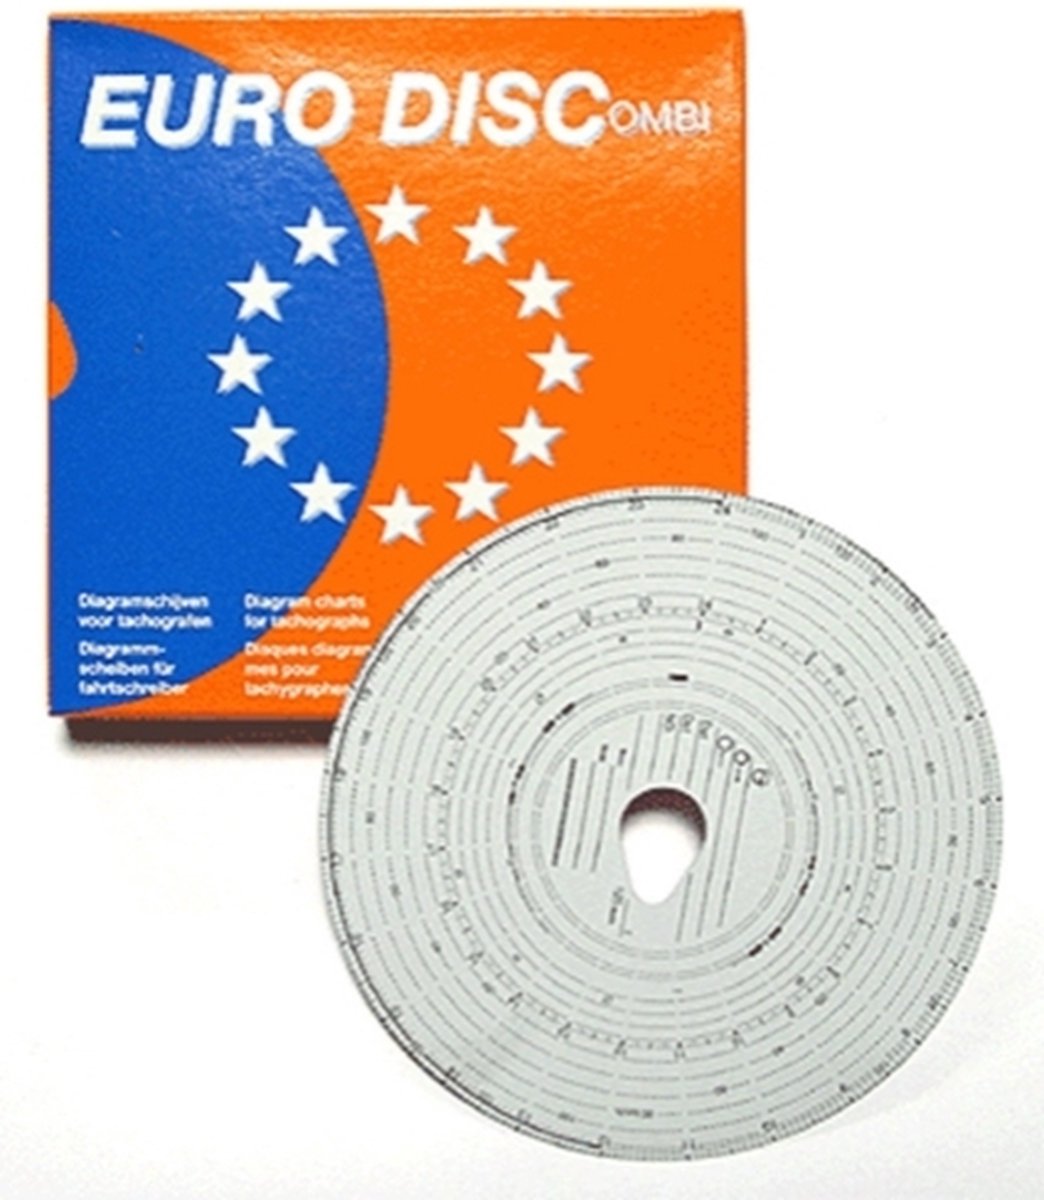 Euro Disc - EURO DISC 140 KM COMBI